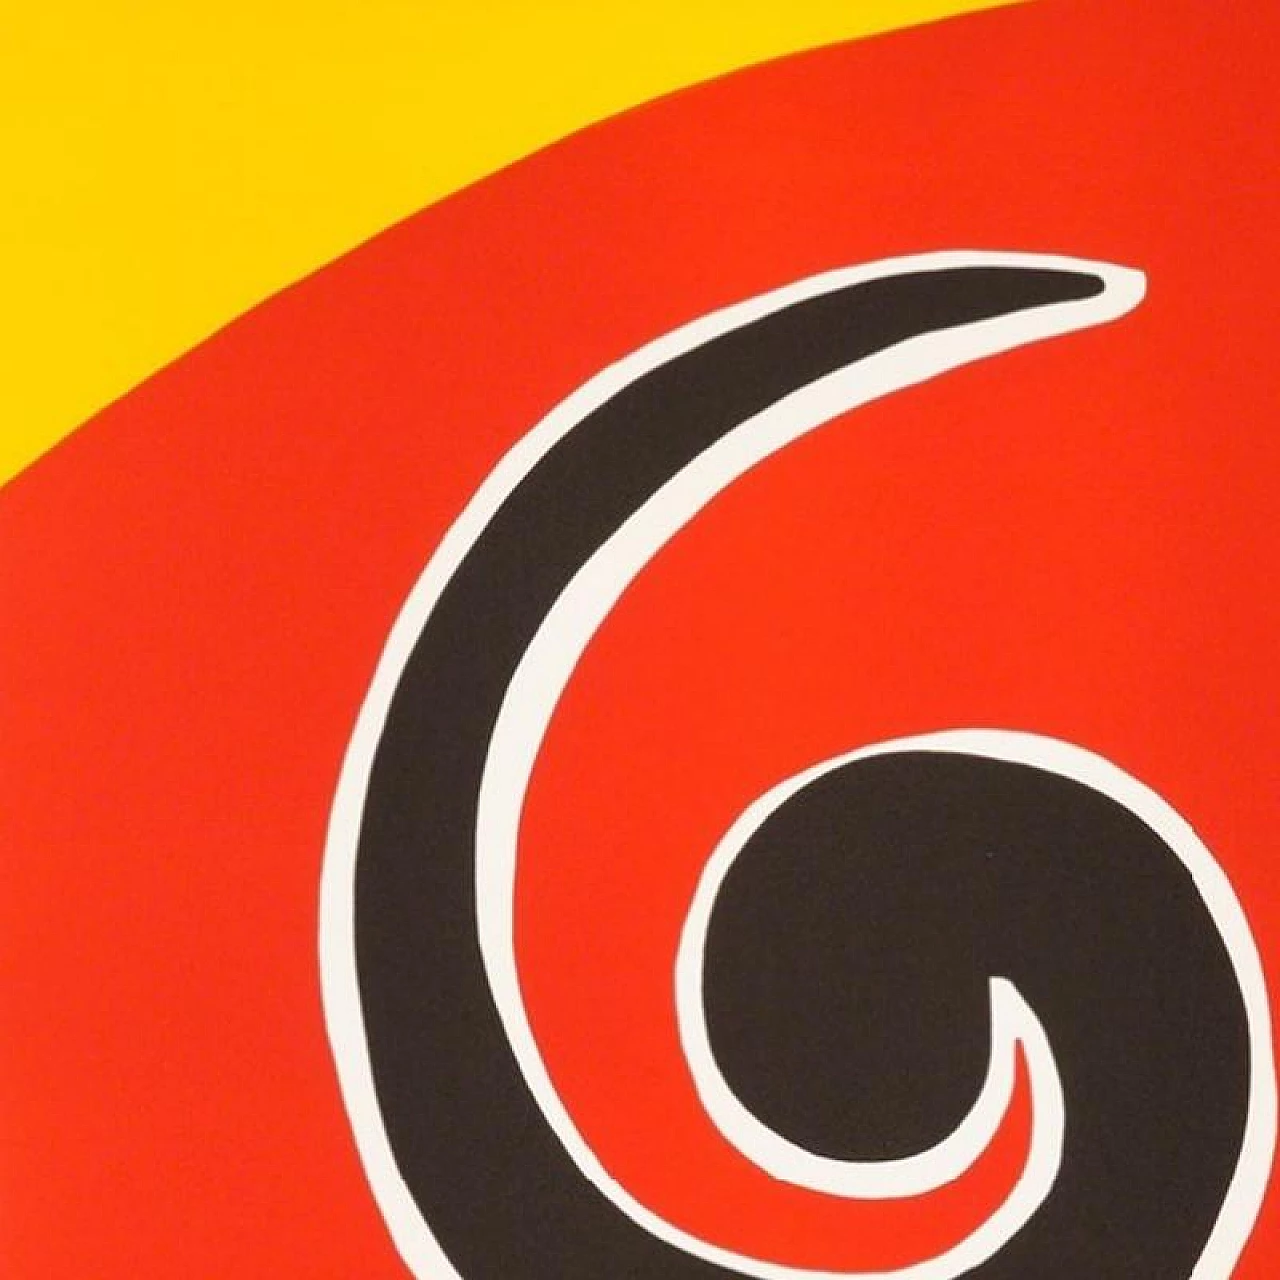 Swirl lithograph by Alexander Calder, 1974 1253362